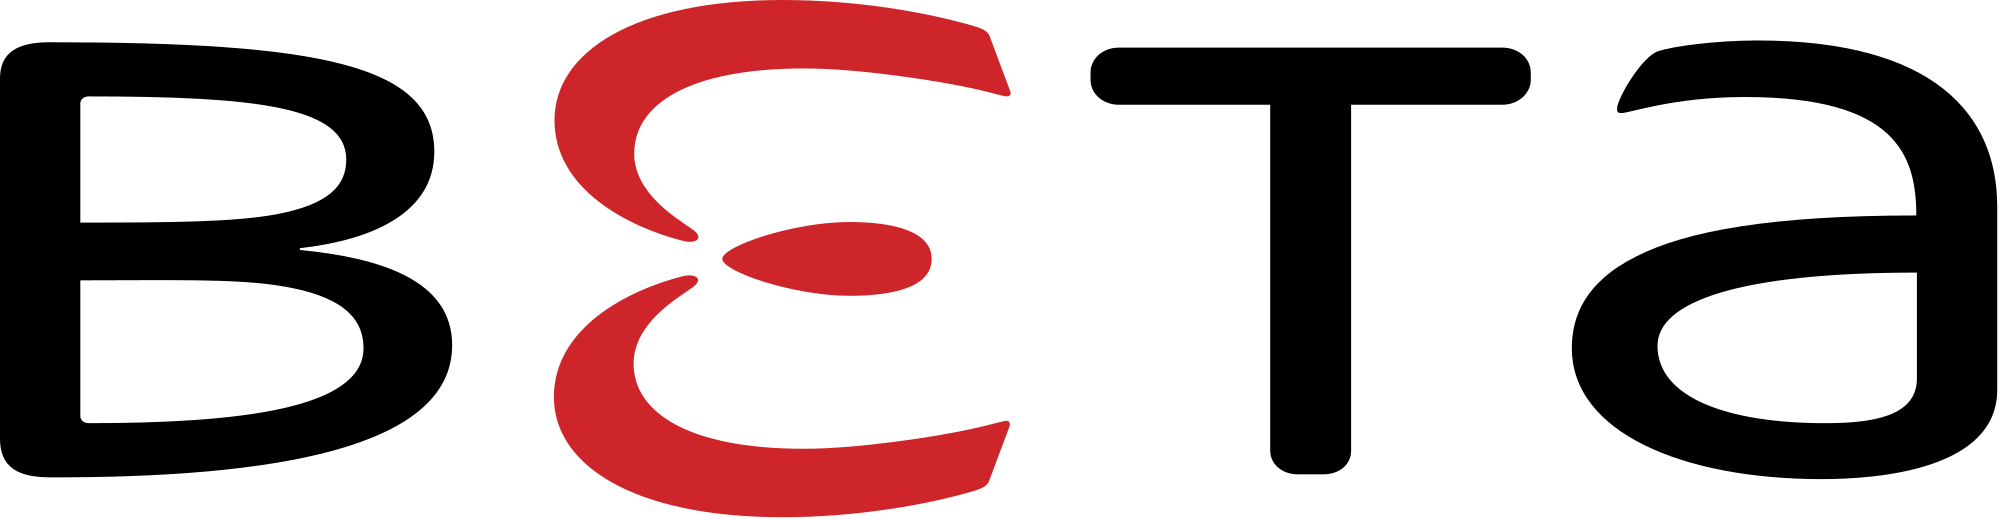 Beta Film Logo